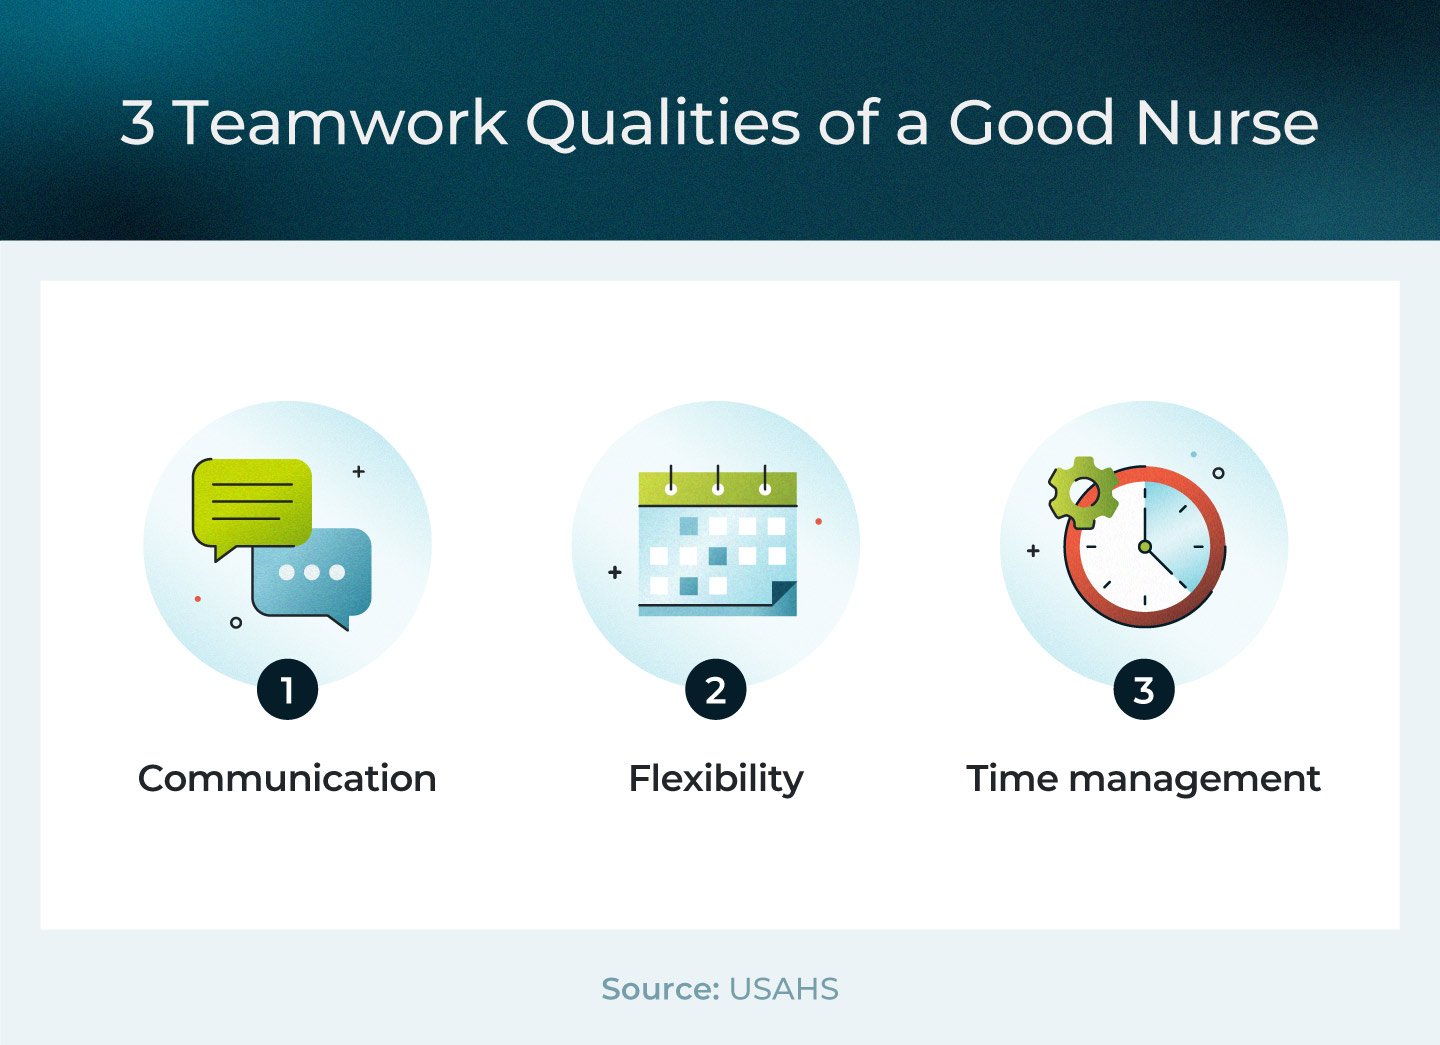 Teamwork qualities of a good nurse.